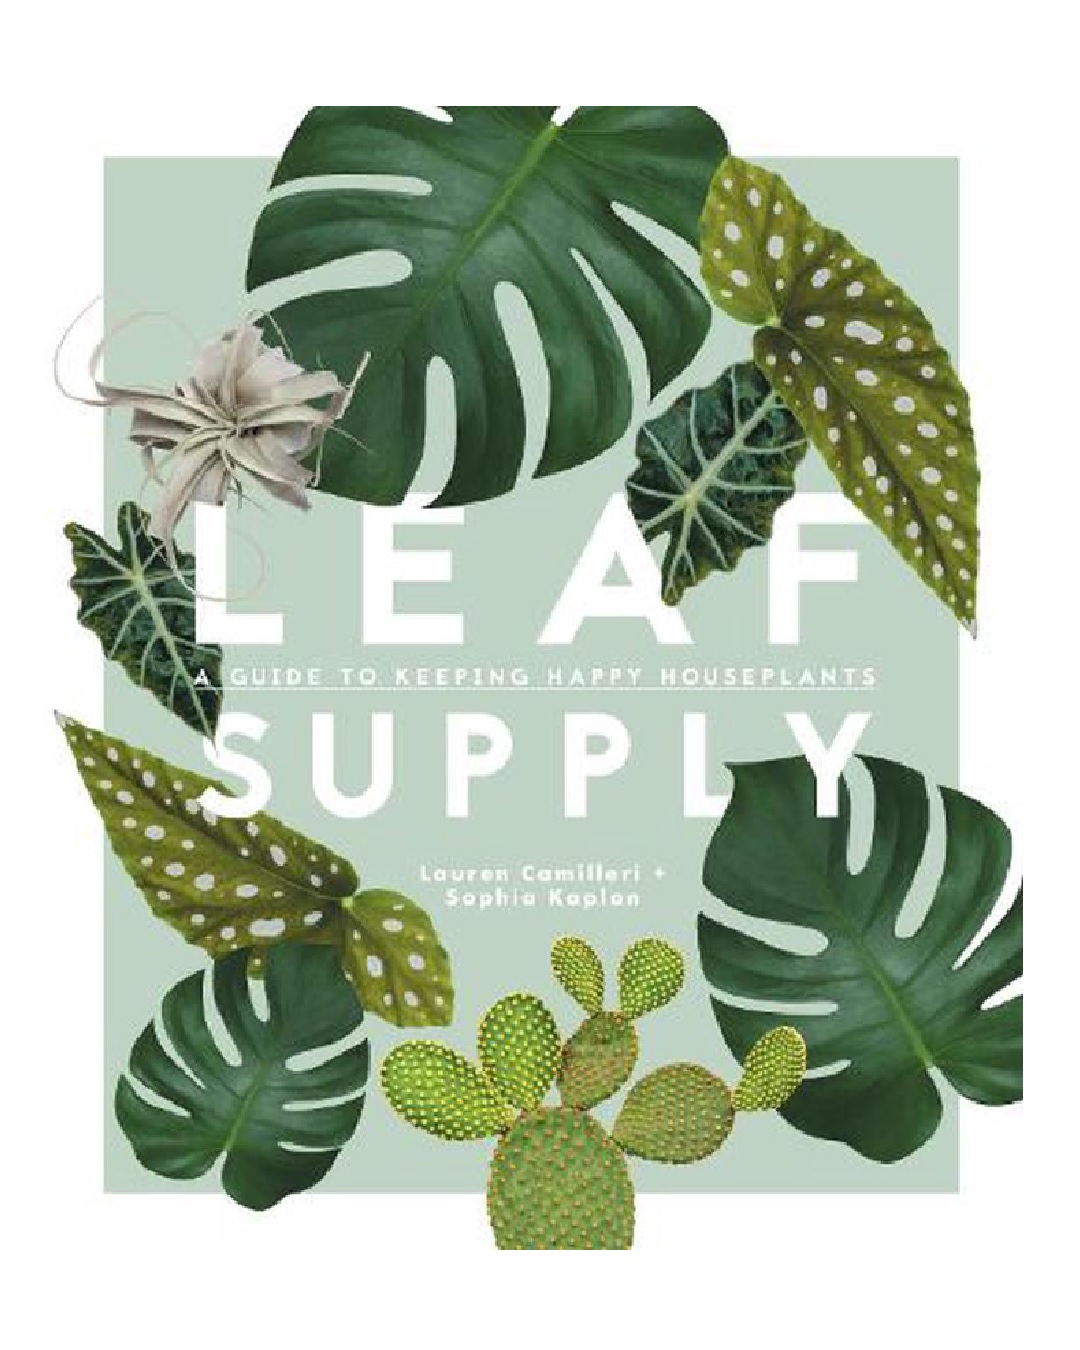 Leaf supply hardcover book on plants